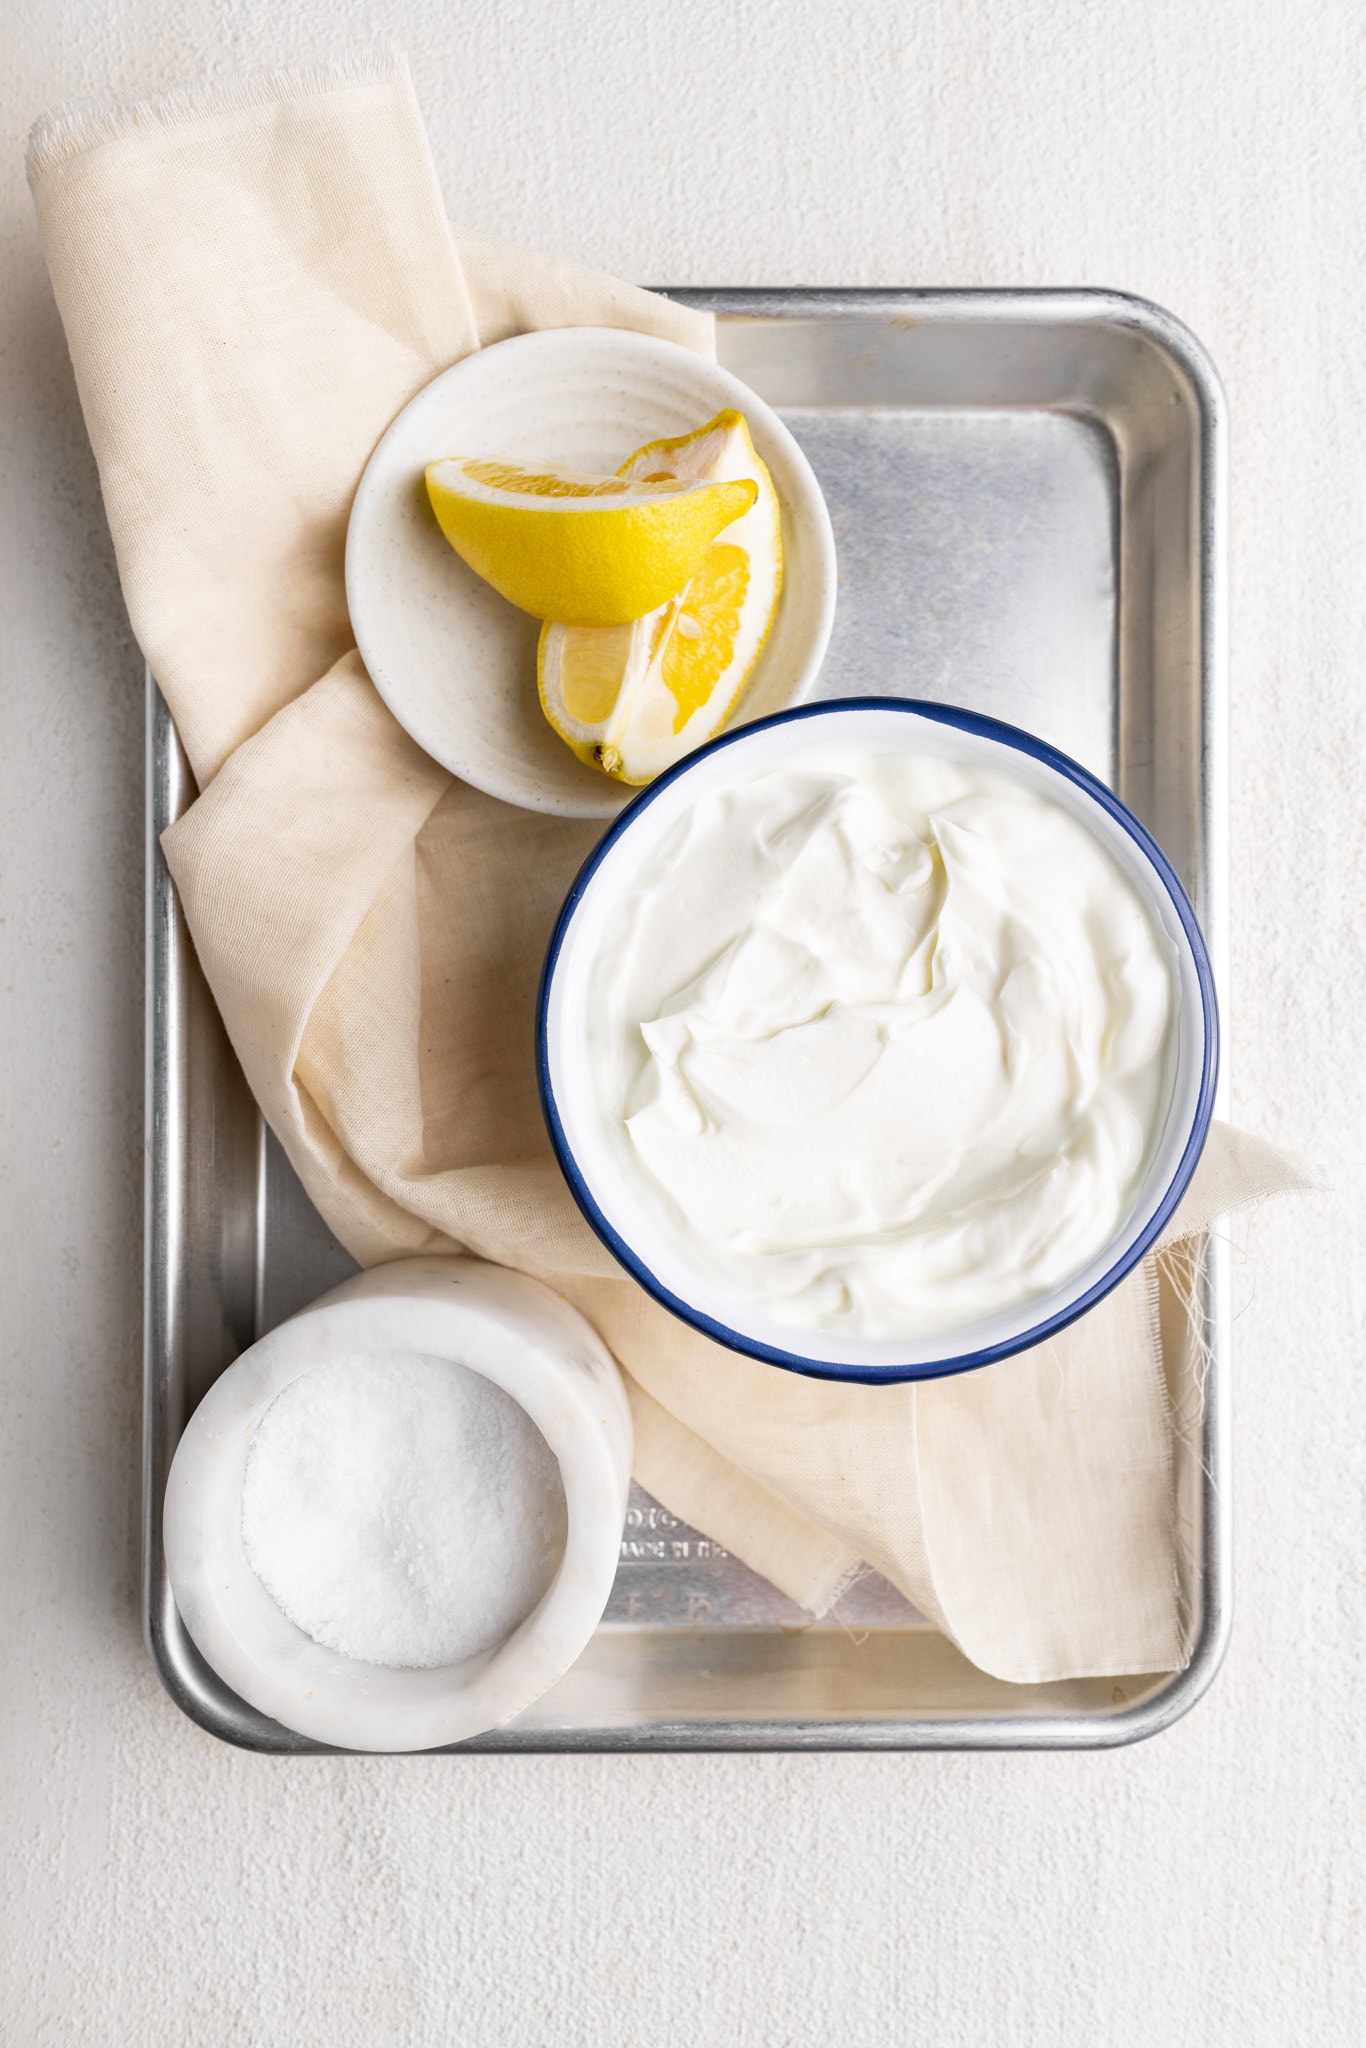 ingredients for labneh;  greek yogurt, salt, lemon, and a cheese cloth